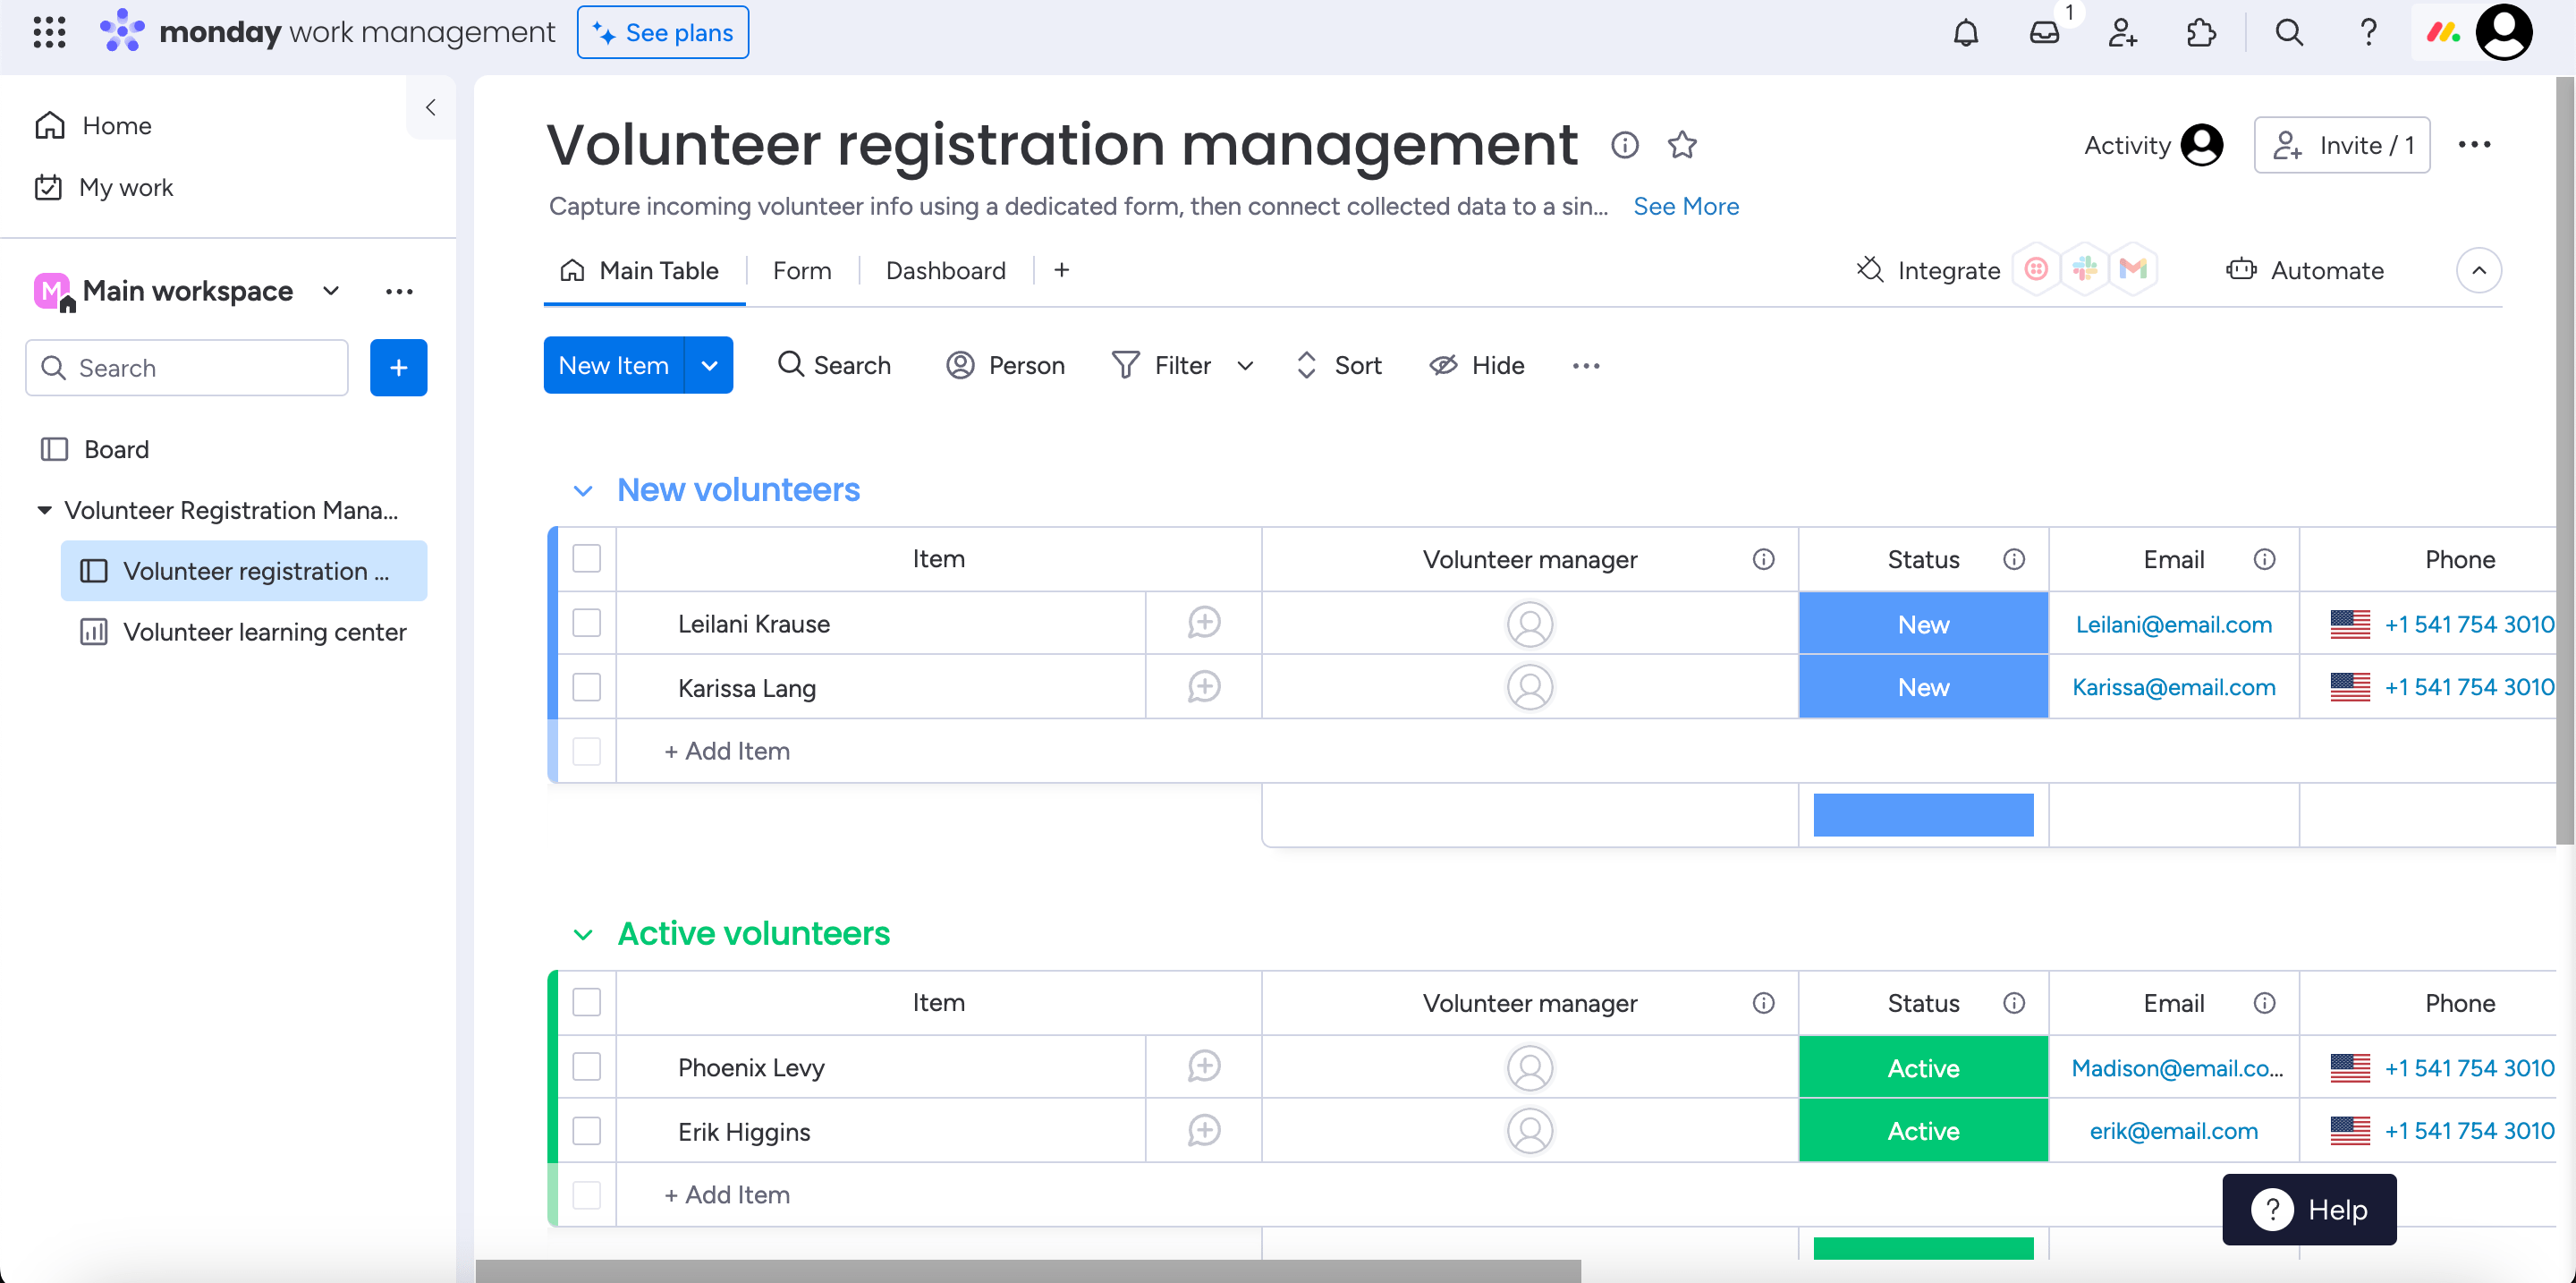 Volunteer registration management template in Monday, source: Monday